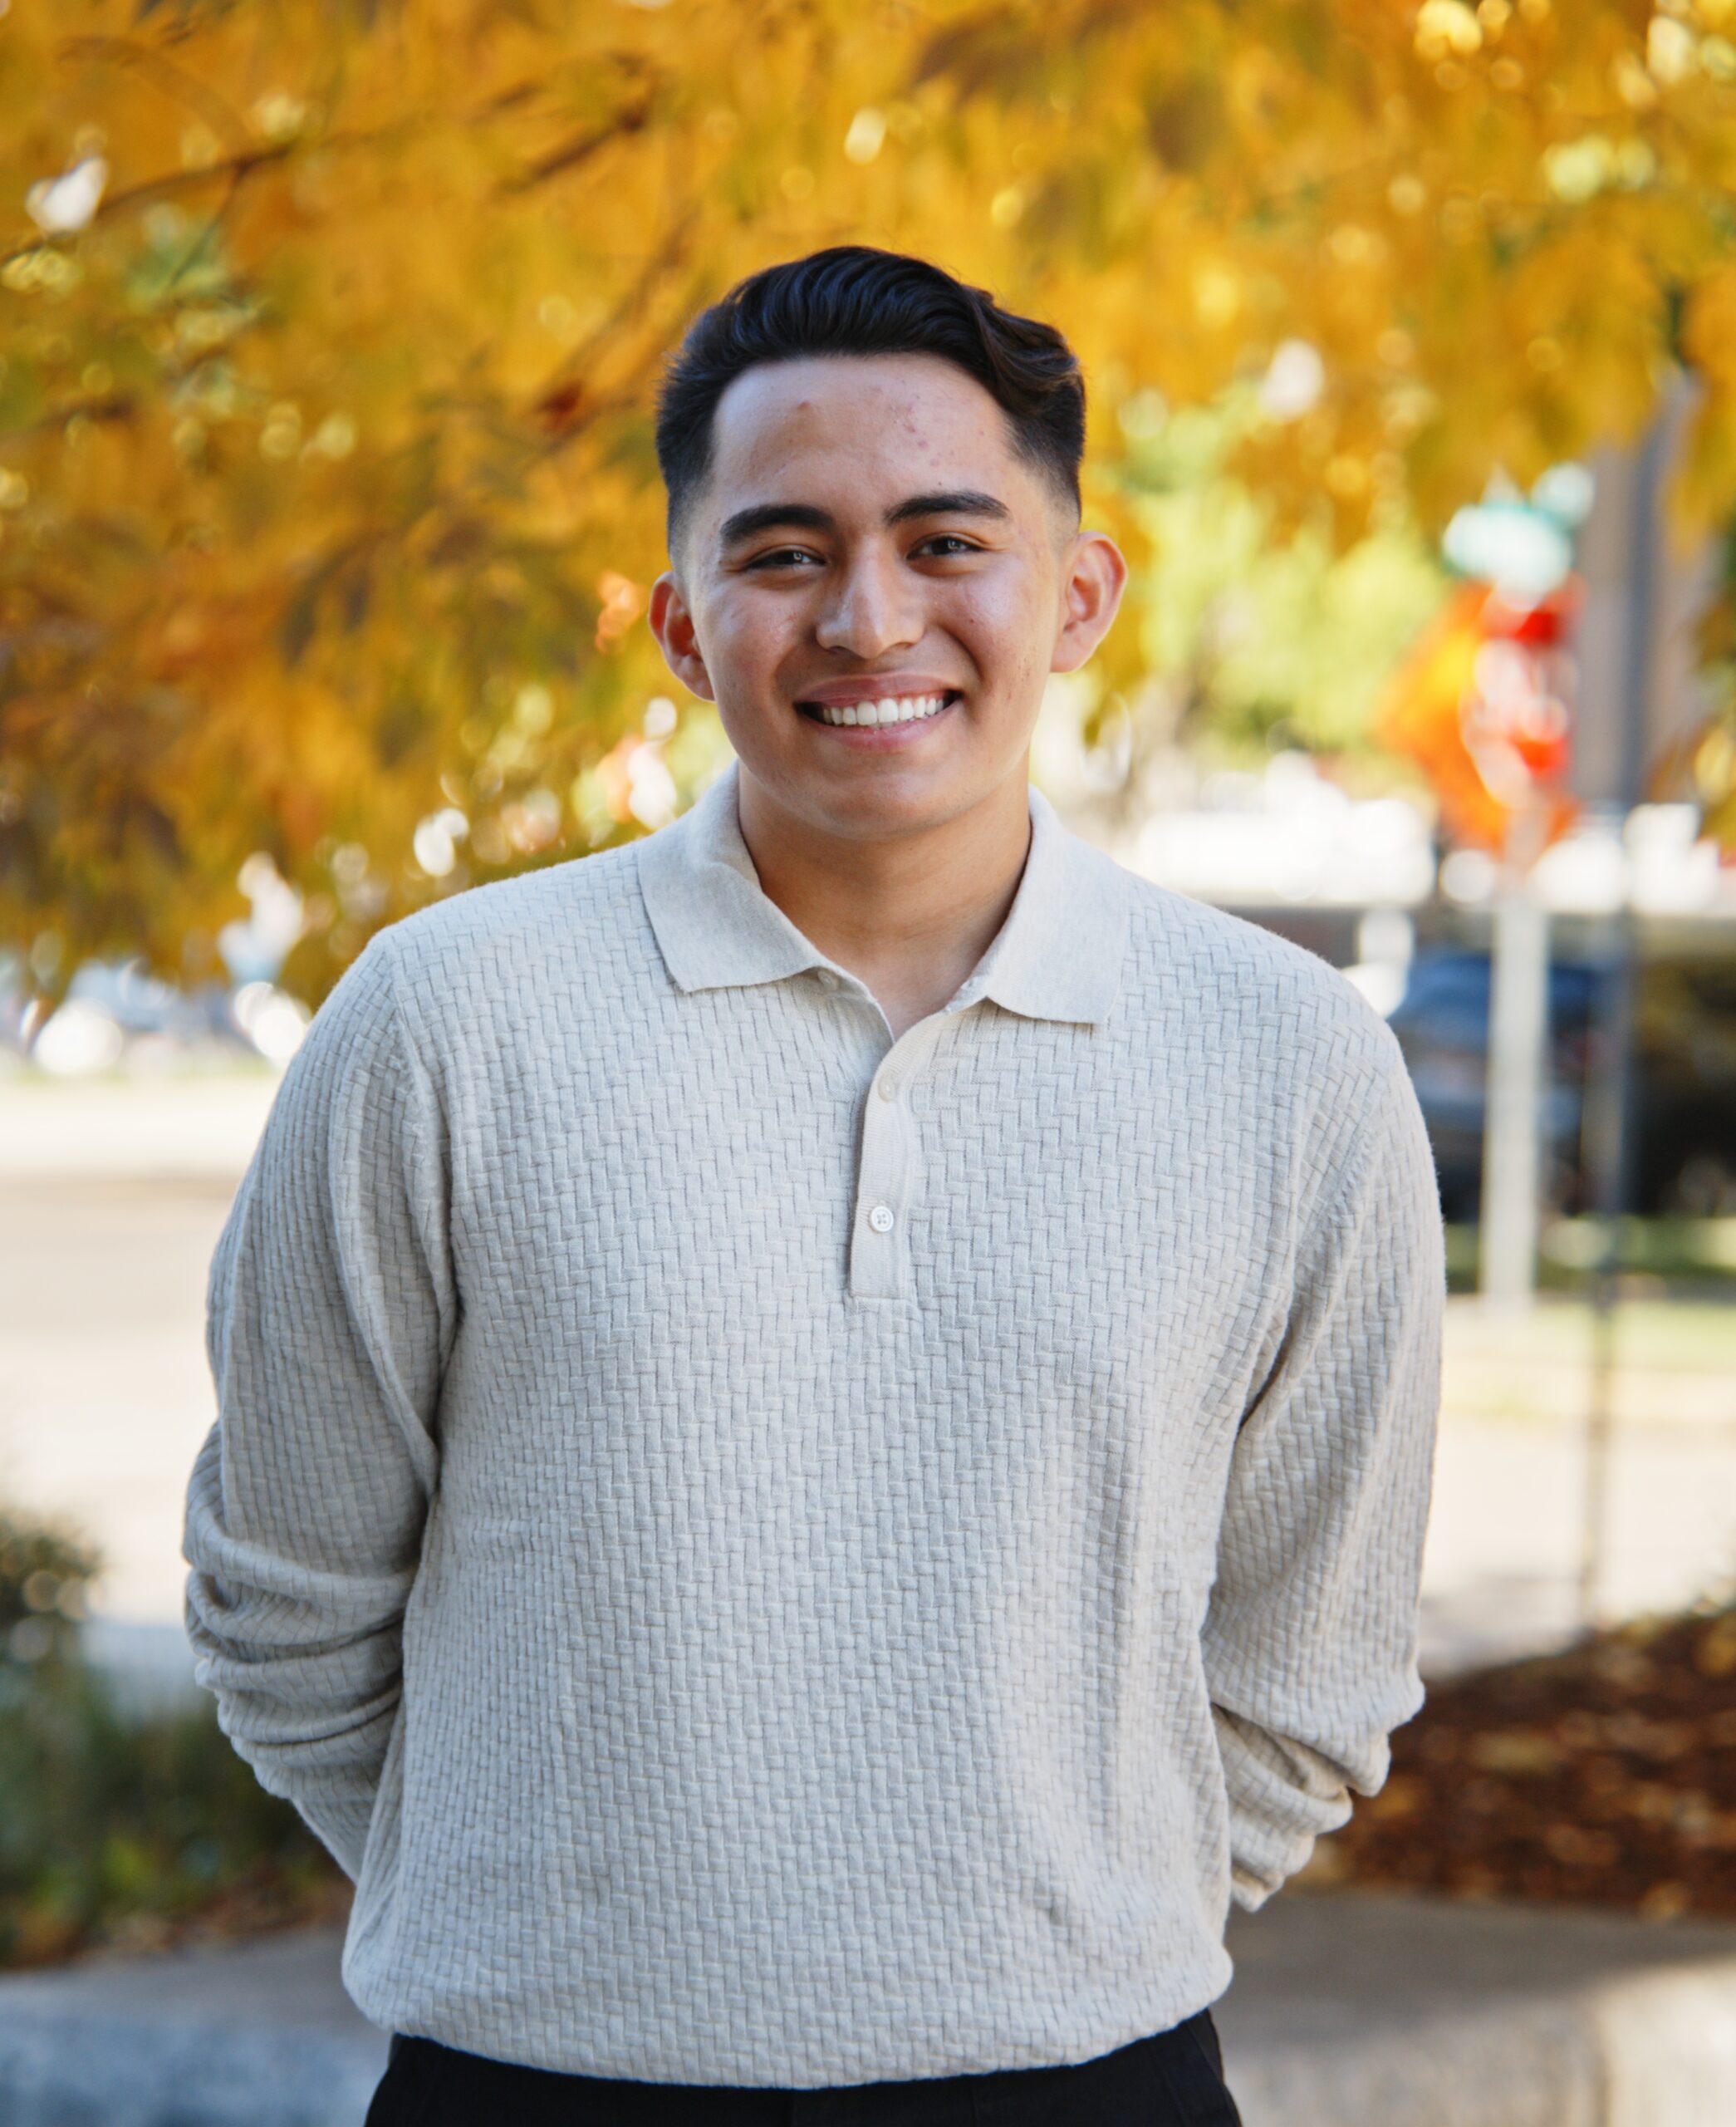 Arturo Valadez is a first-generation college student from Idaho Falls, Idaho.